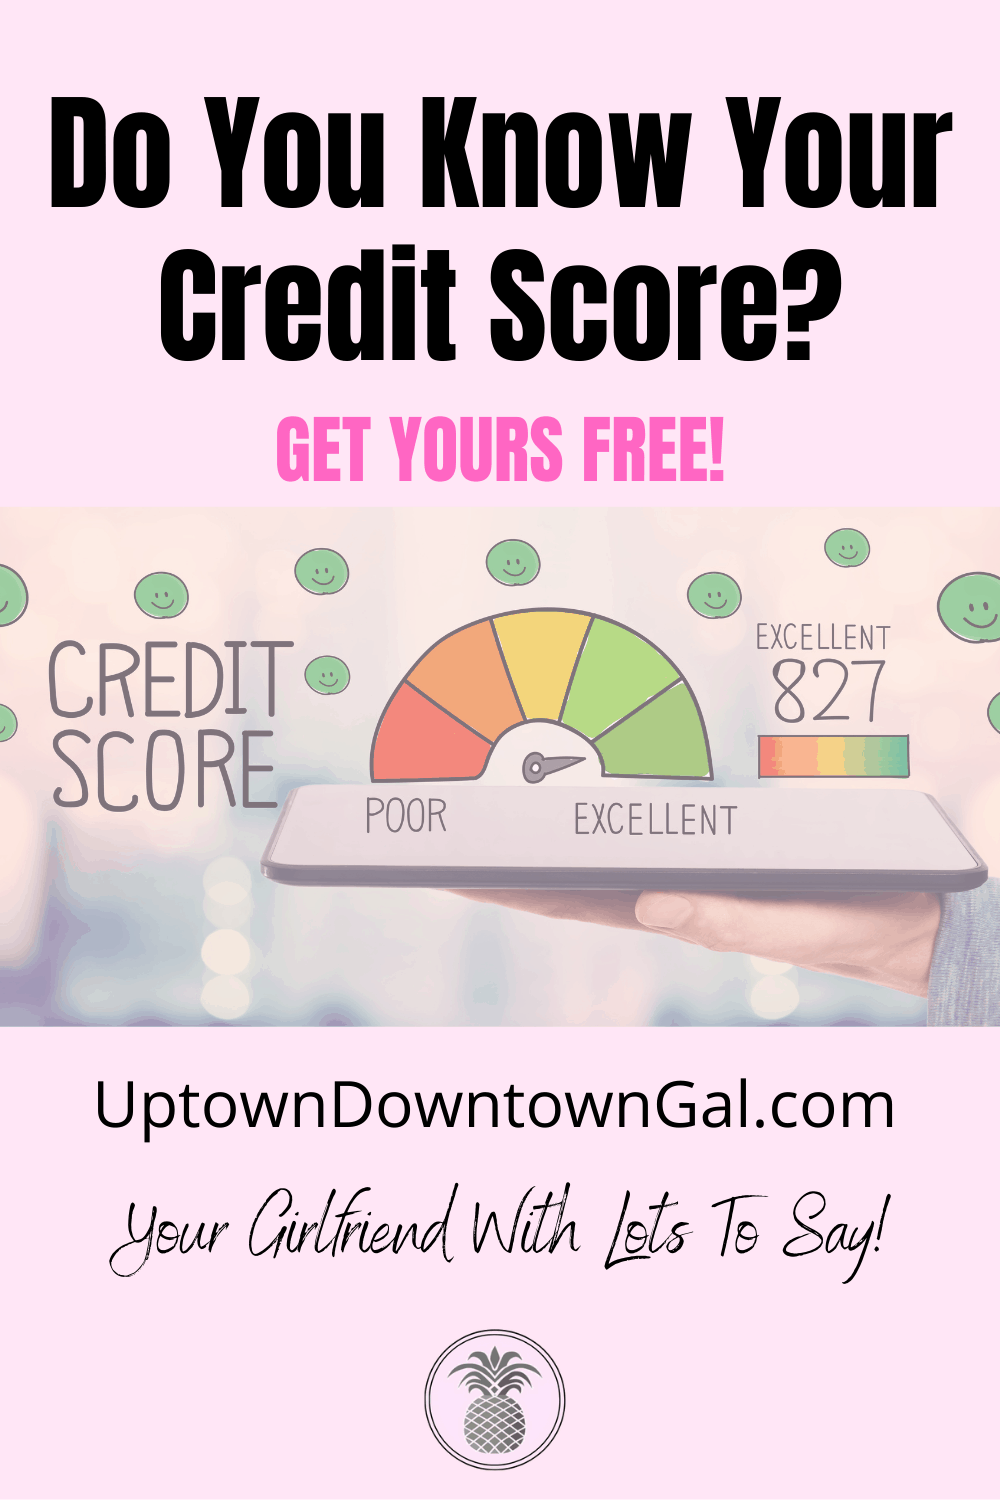 Allison's Free Credit Score